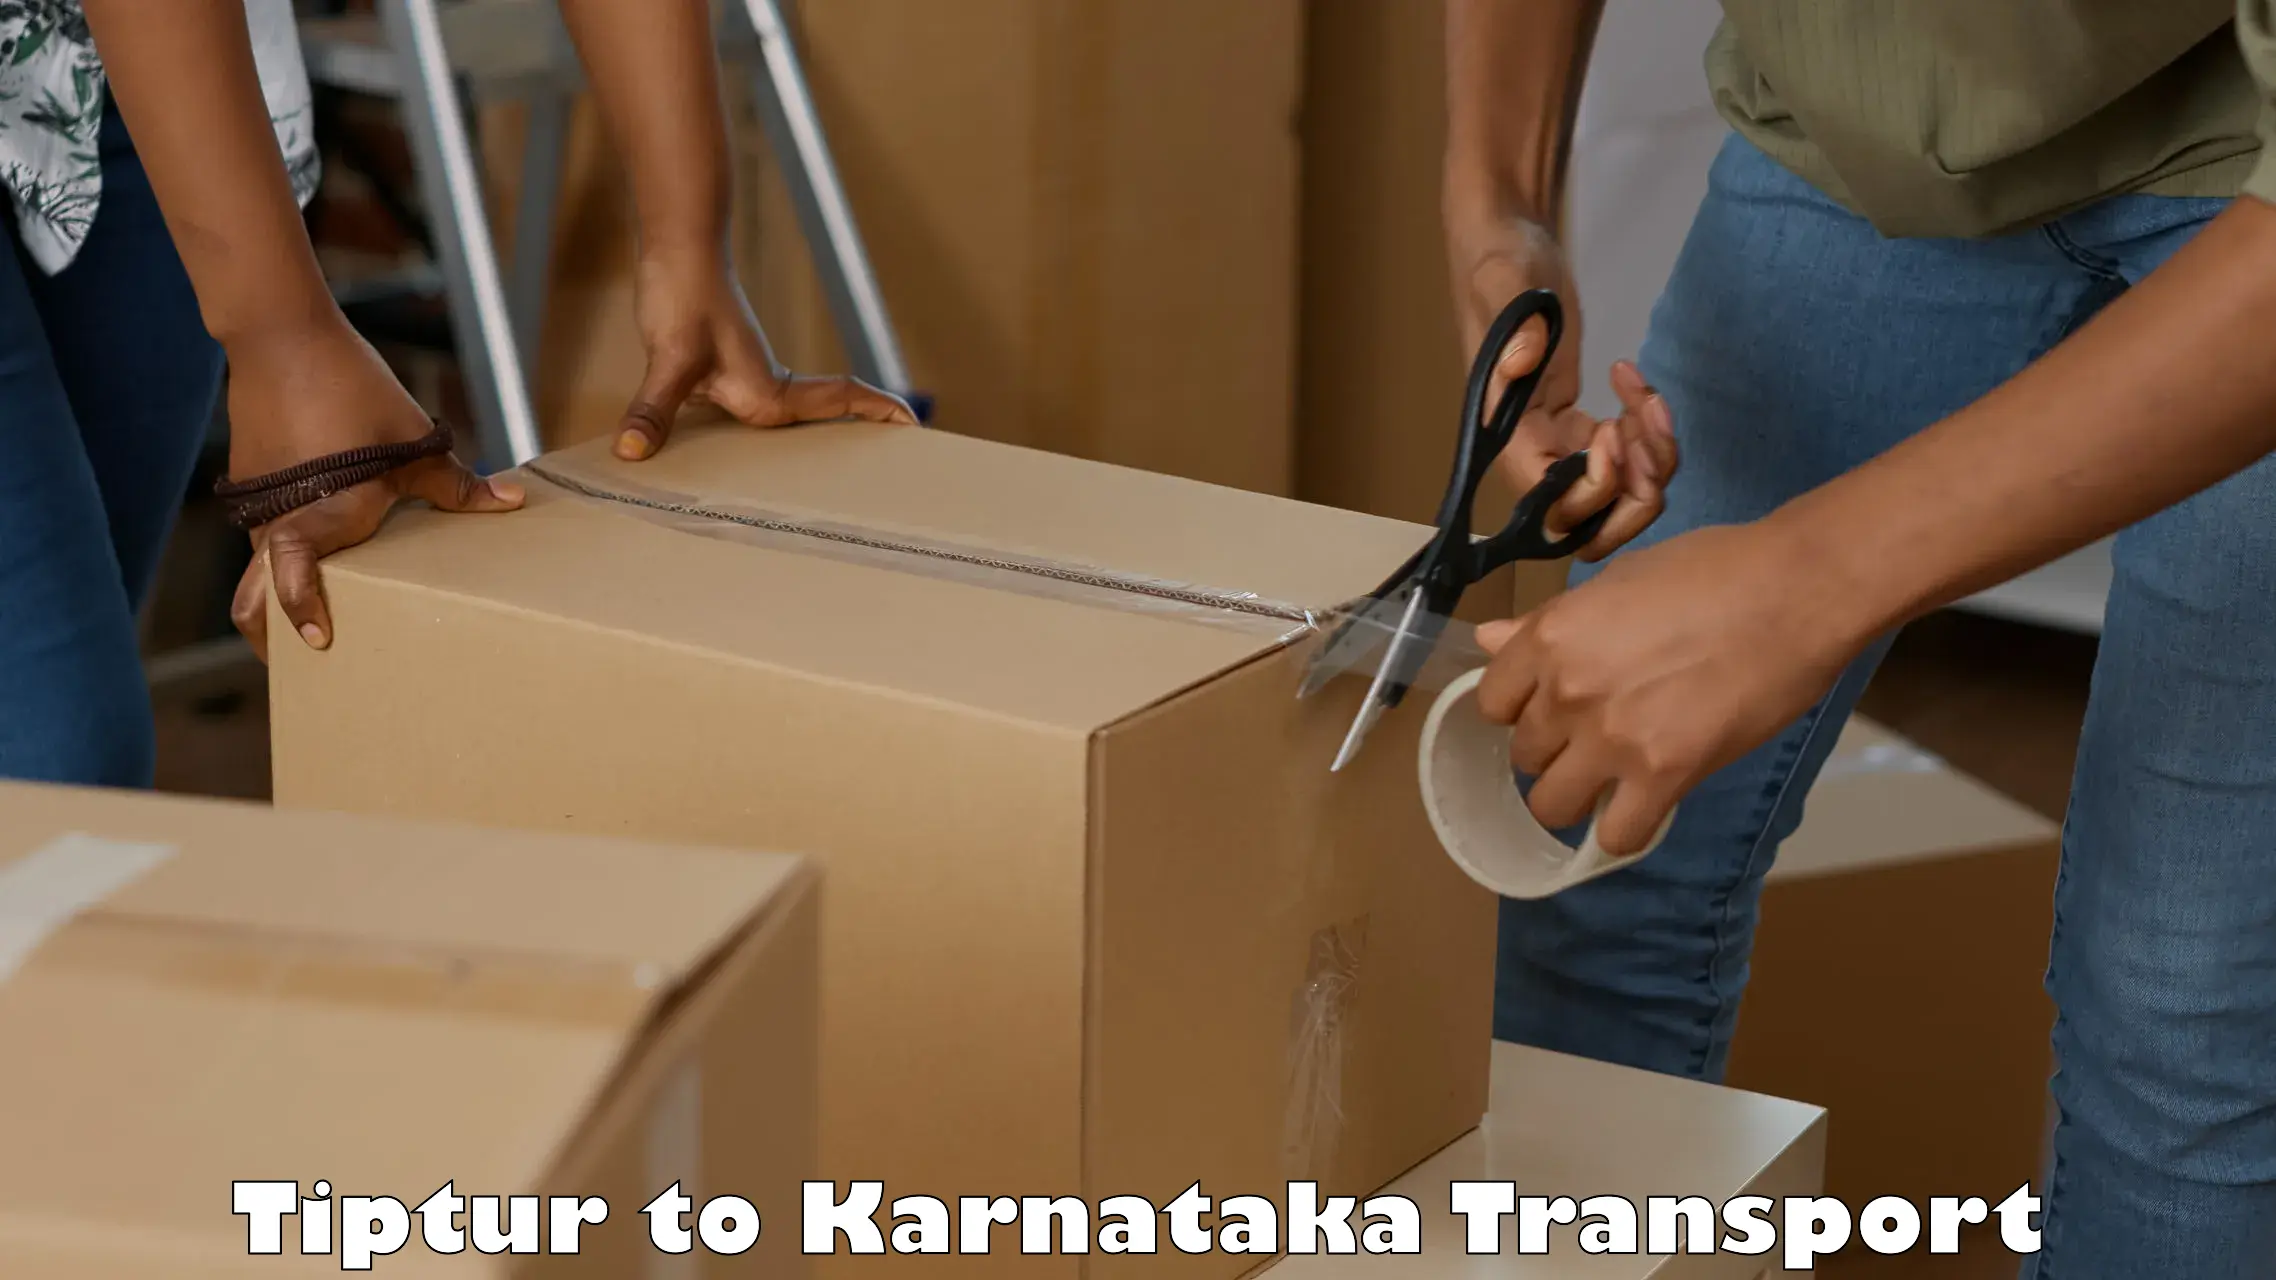 Truck transport companies in India Tiptur to Karnataka